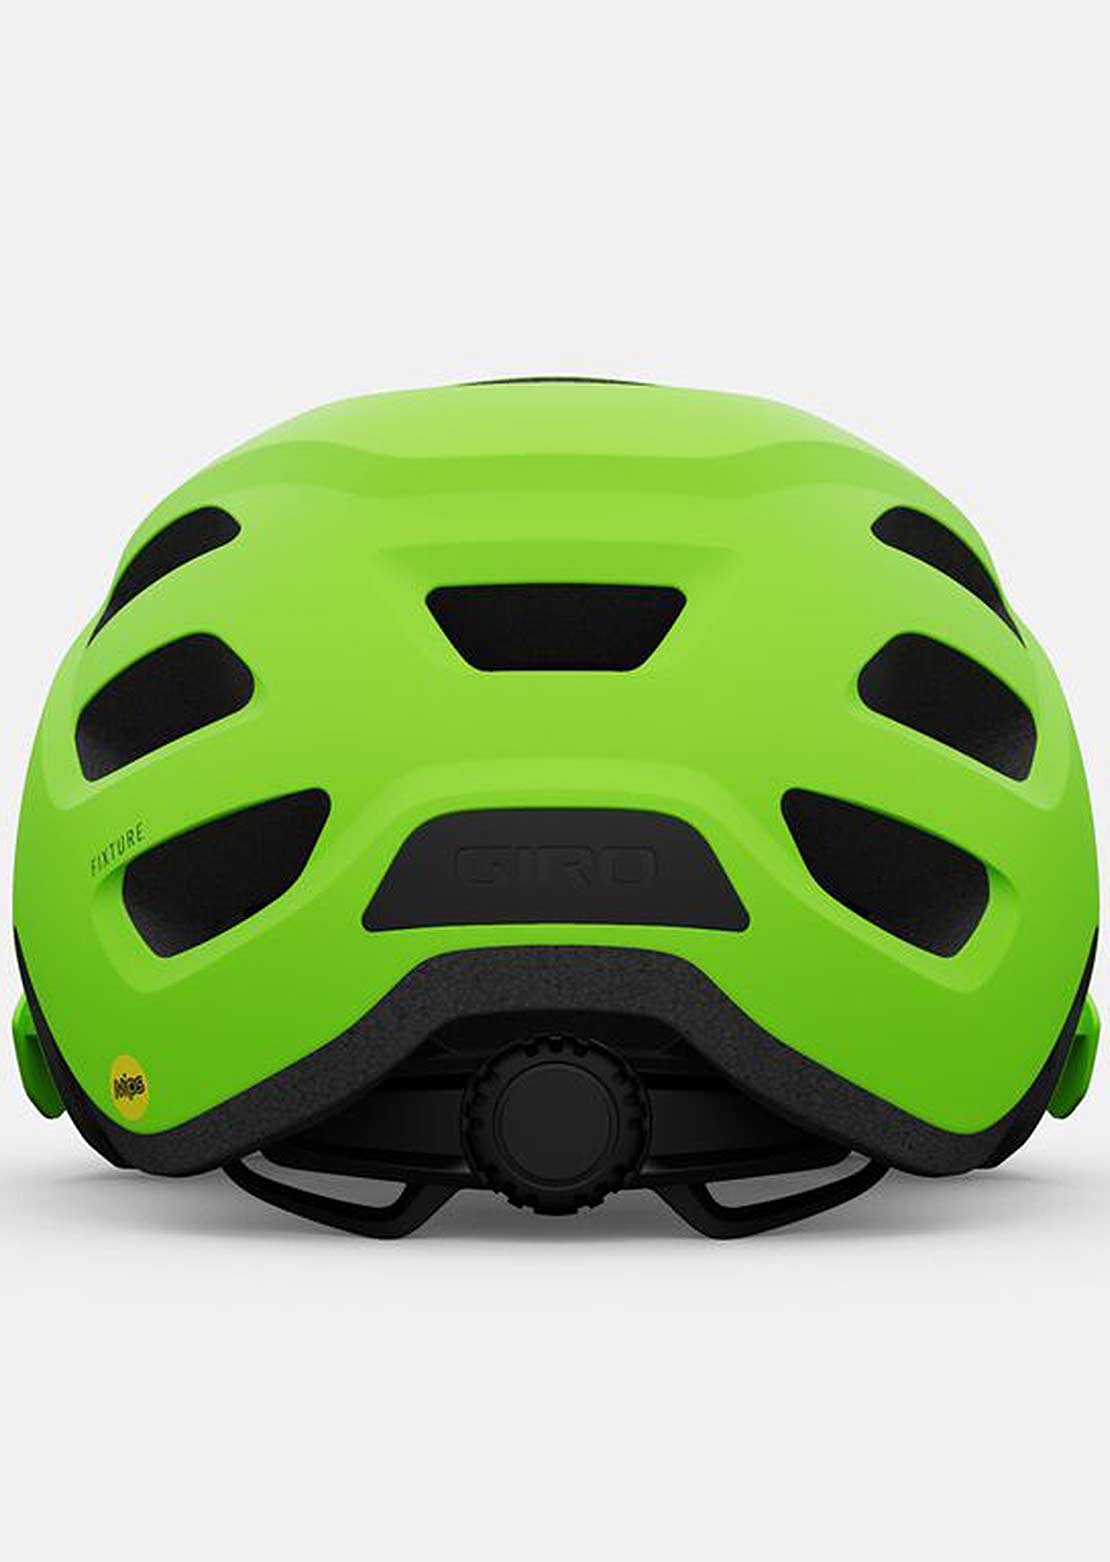 Giro Men's Fixture Mips Mountain Bike Helmet - PRFO Sports